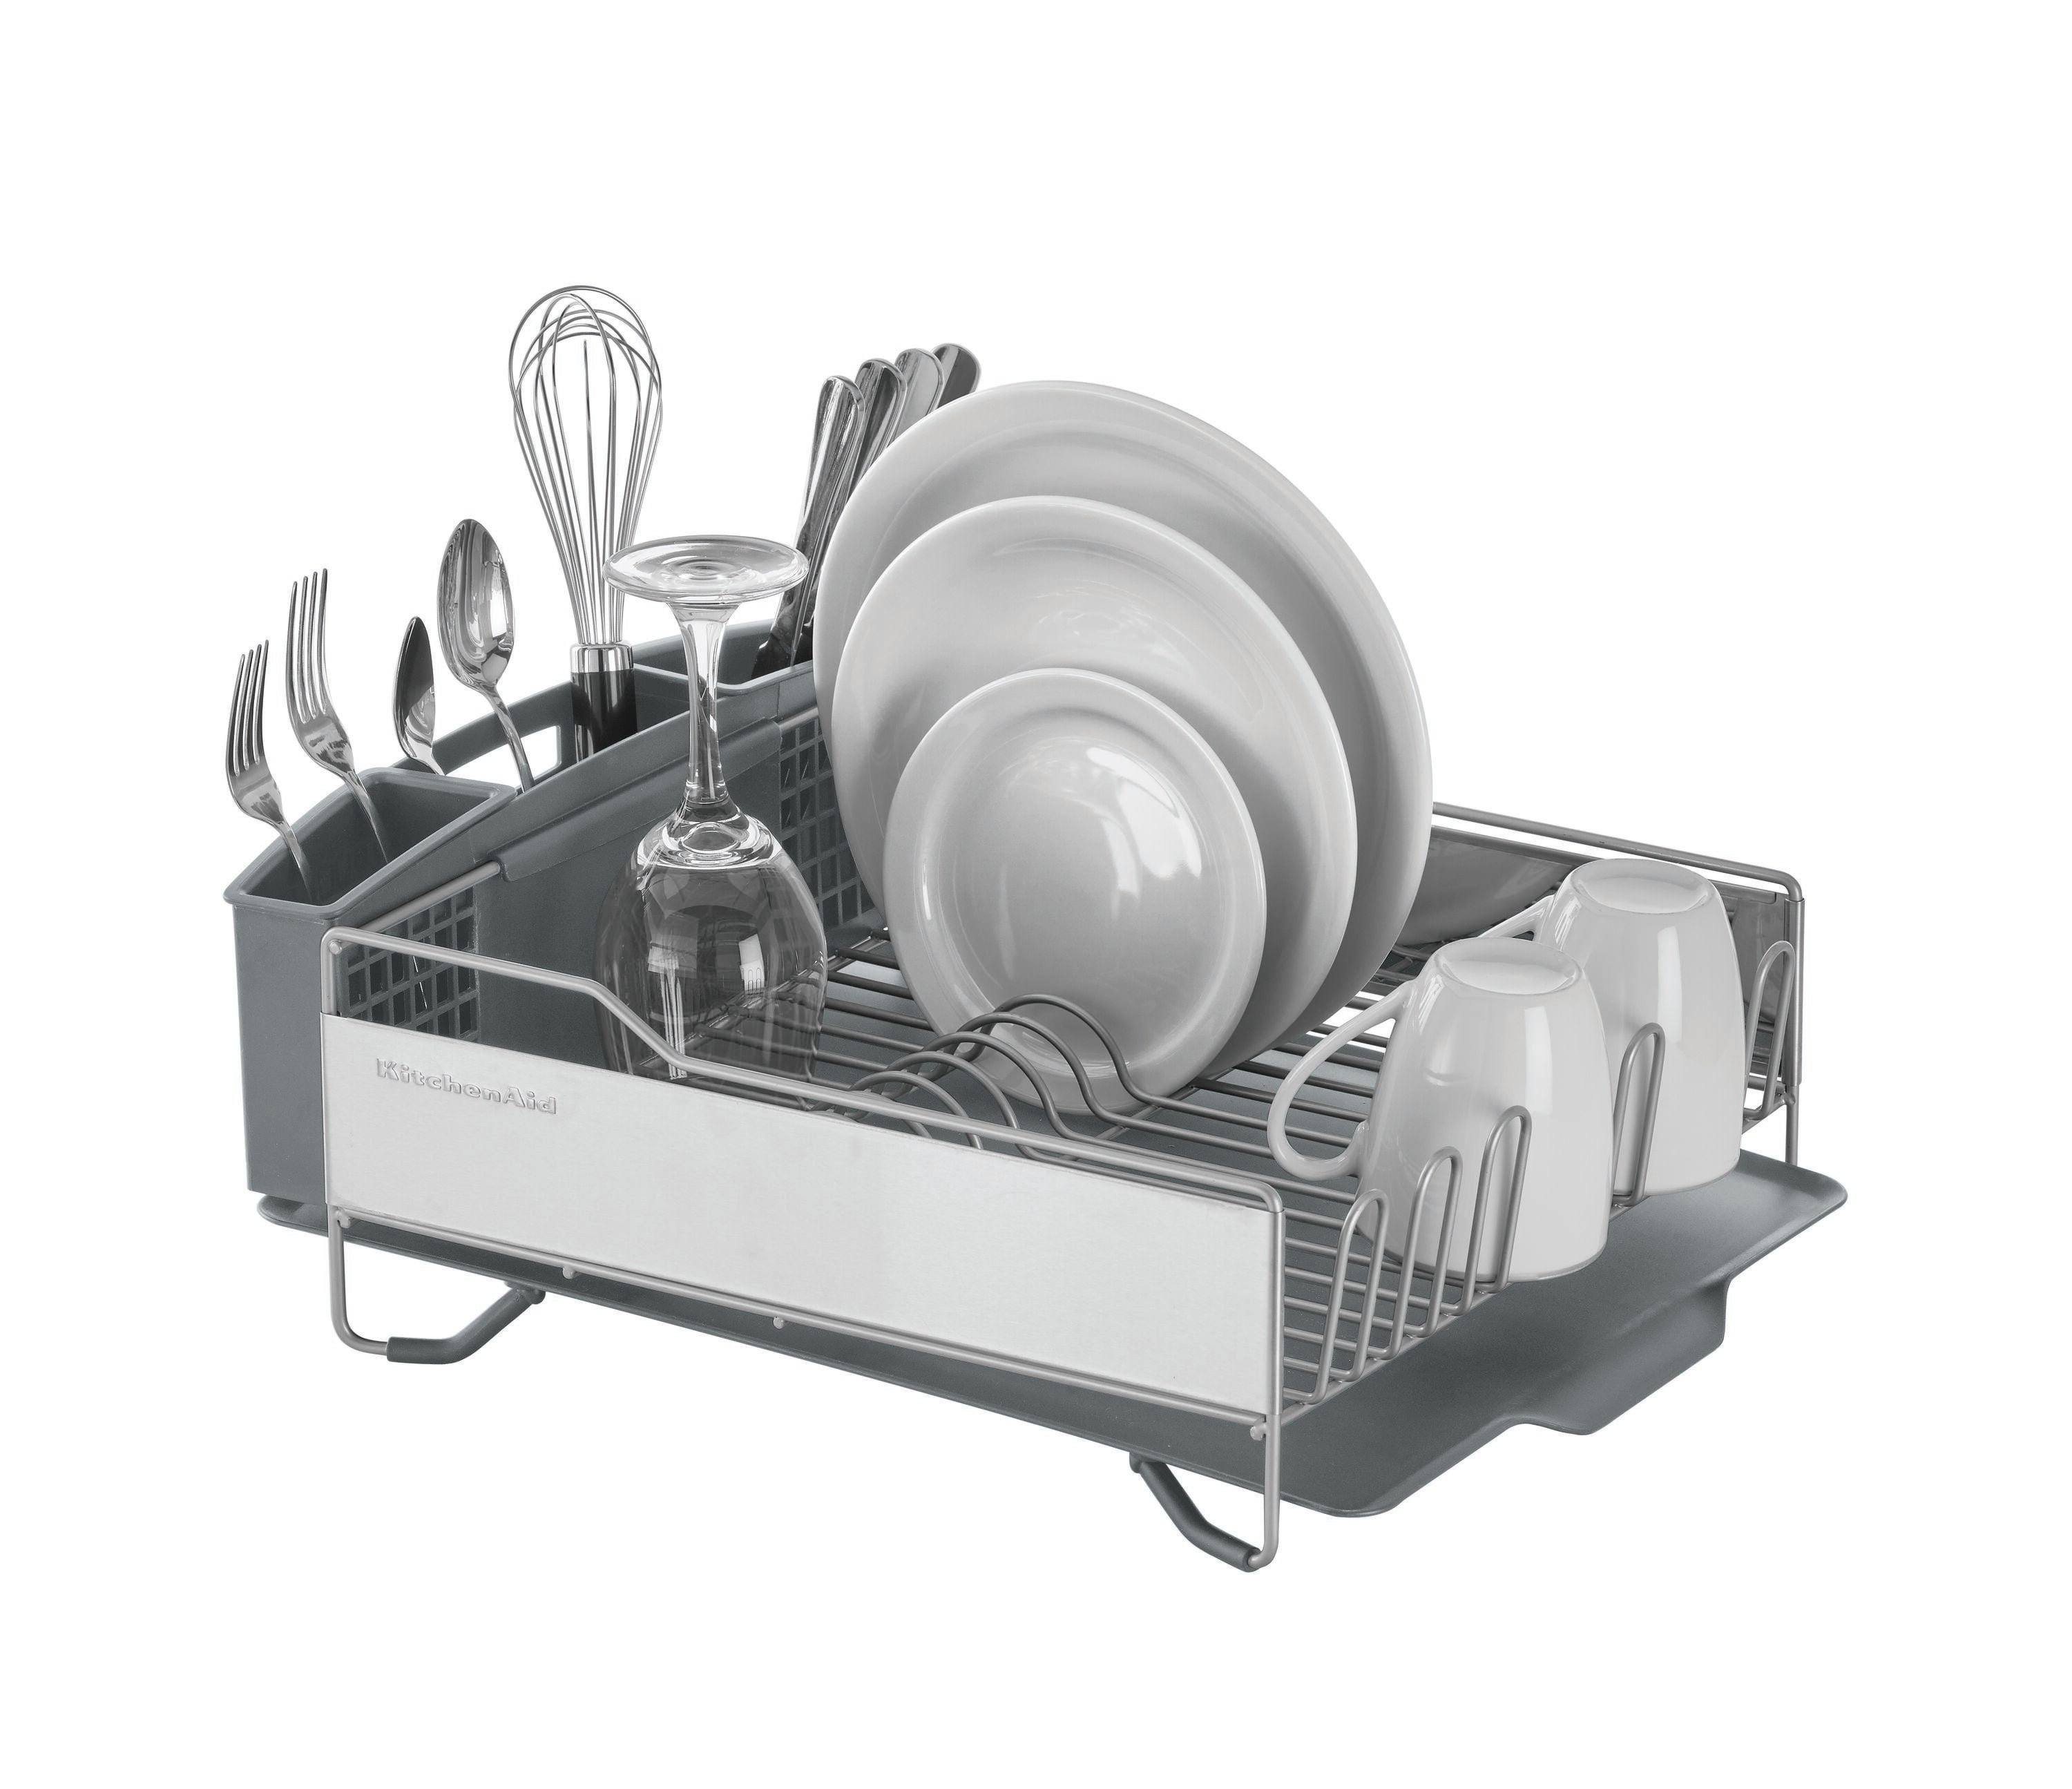 KitchenAid Satin Wire Expandable Dish Rack, 23.18-Inch, Gray